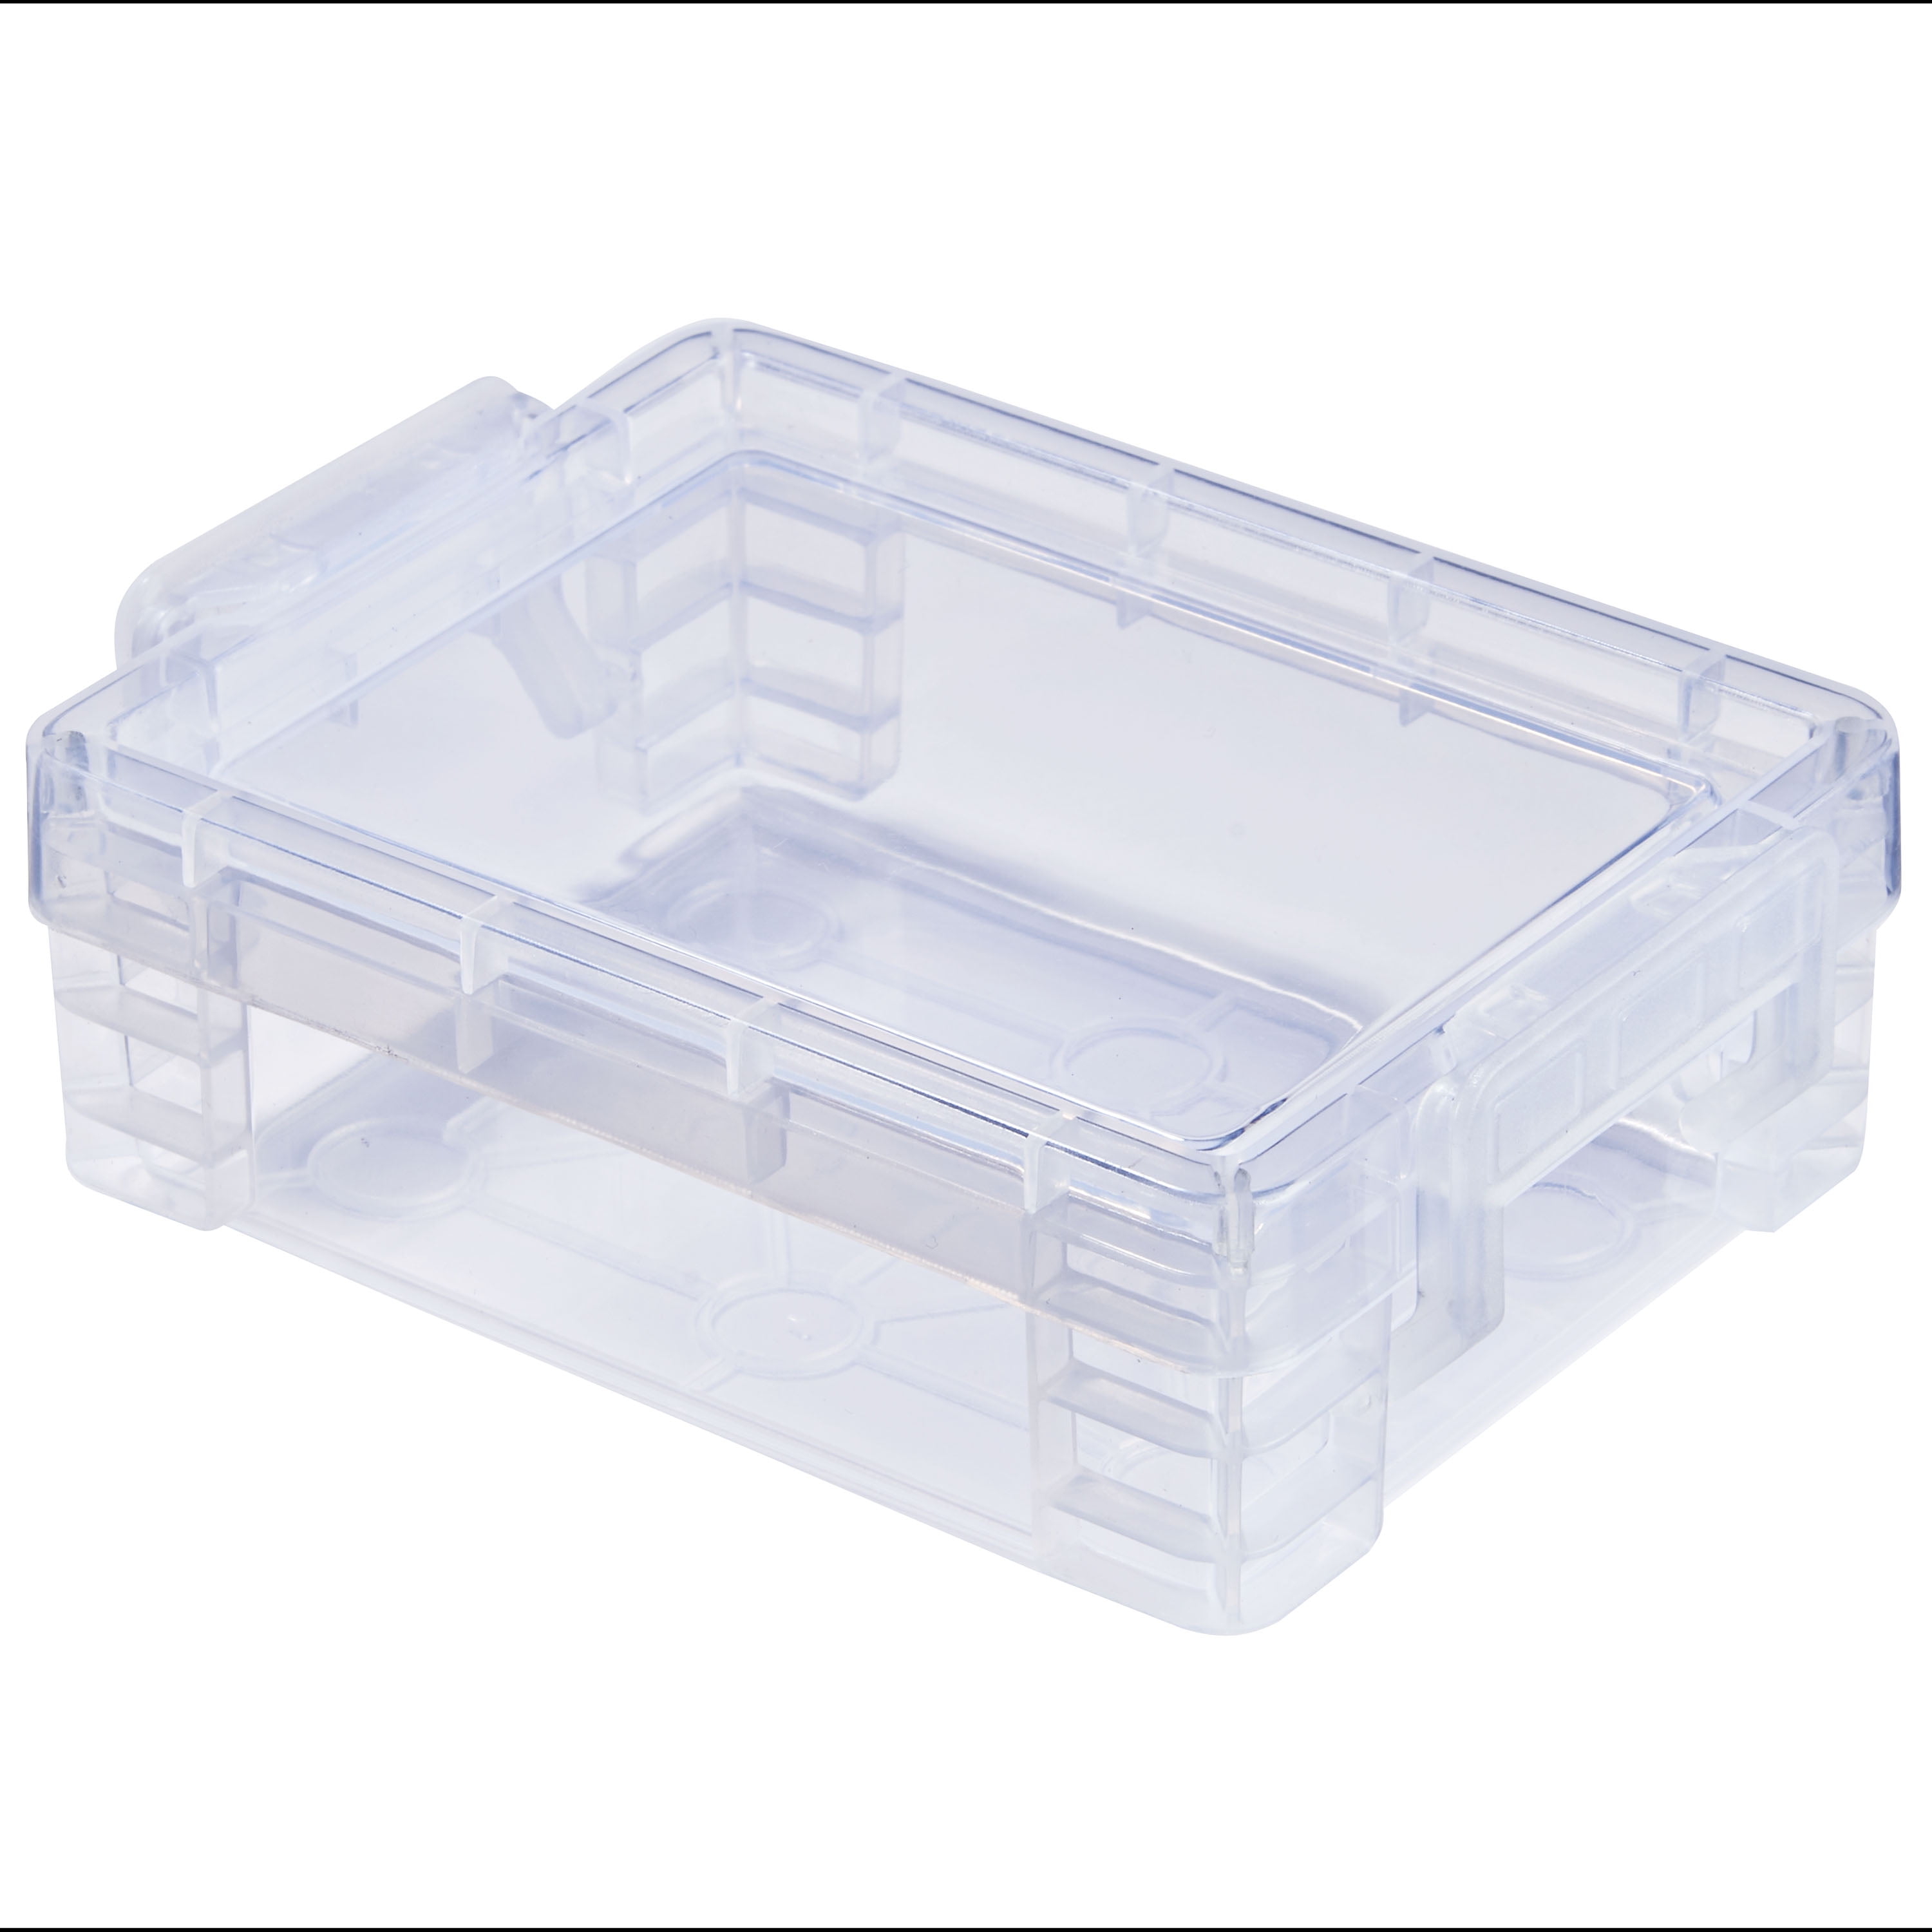 Pen + Gear Plastic Storage Box, Clear Desktop Organizers